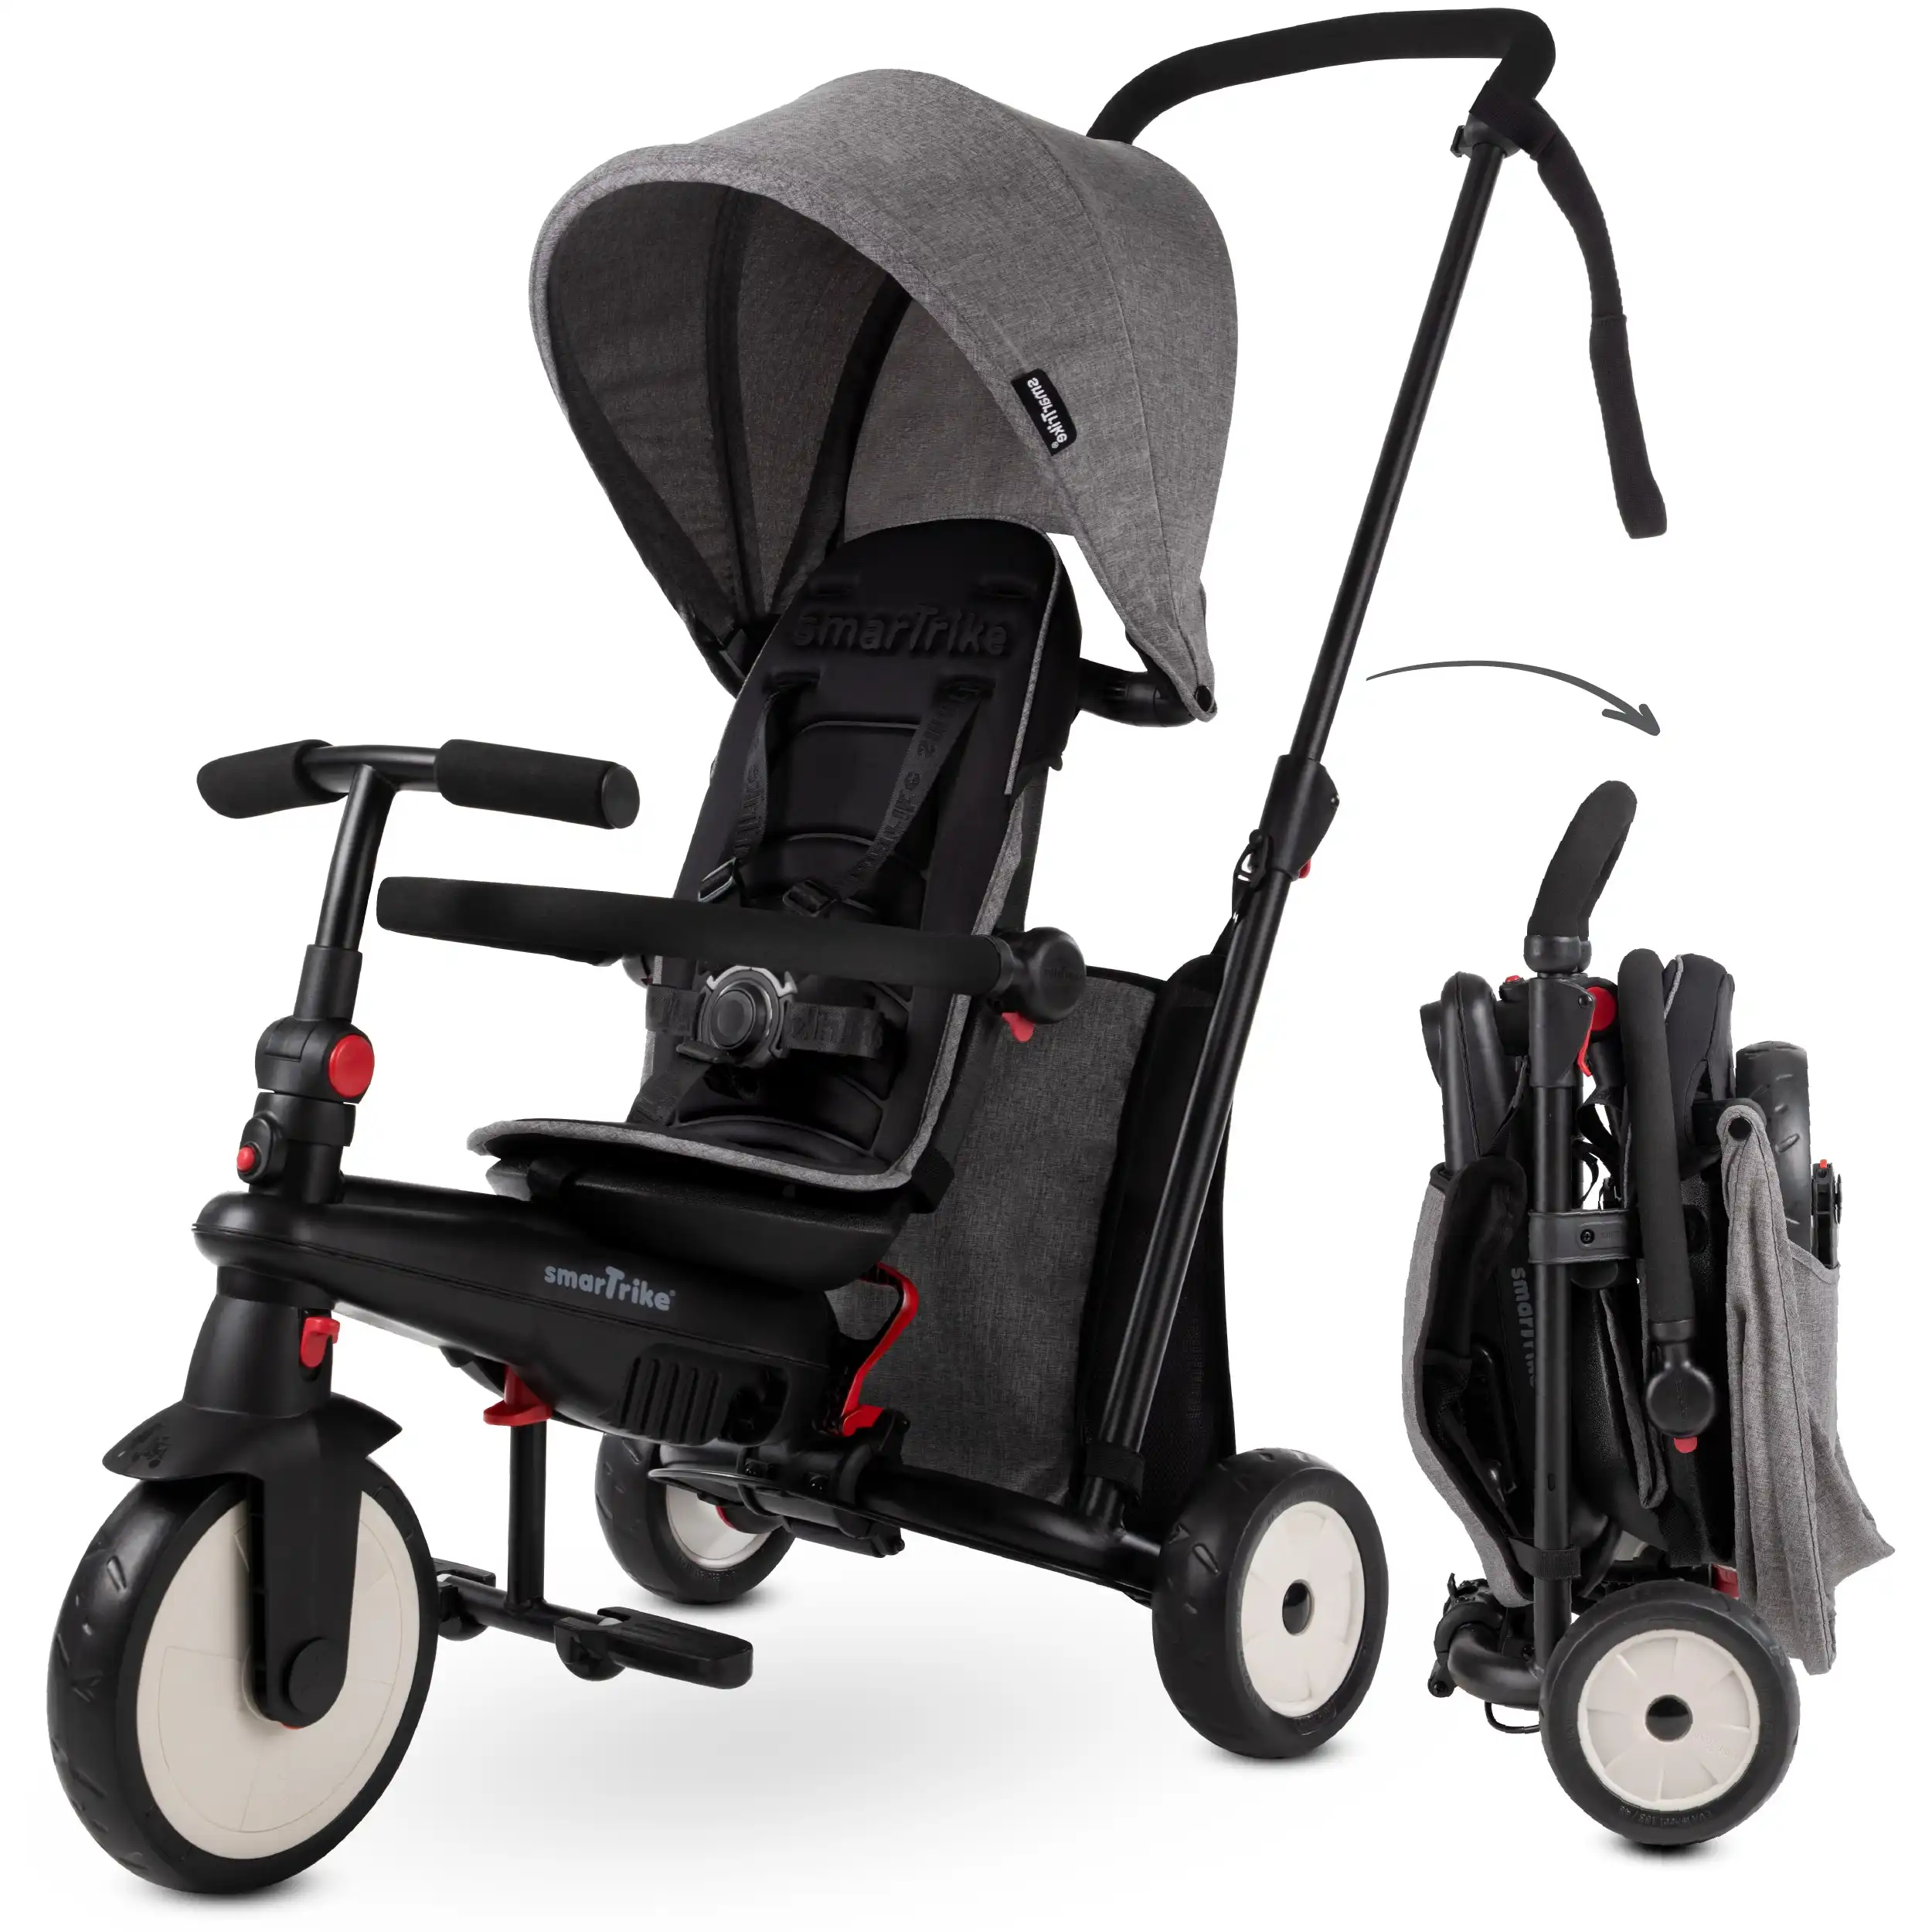 SmarTrike STR3 Journey Grey - Folding Baby Tricycle 6 in 1